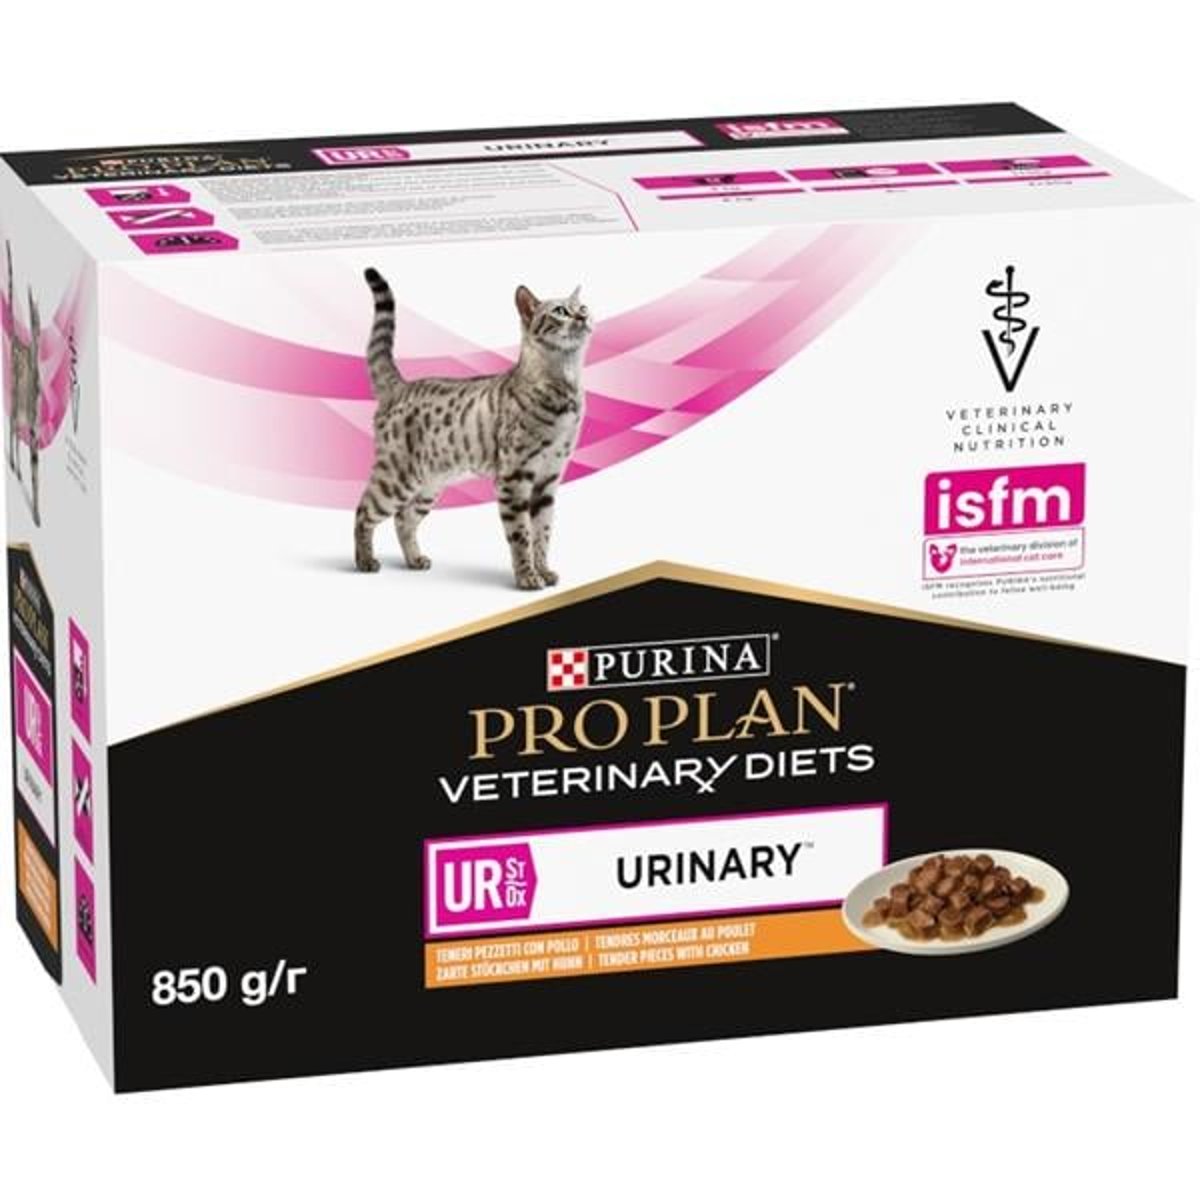 Pro Plan Veterinary Diets St/Ox Urinary Chicken krmivo pro kočky (10×85 g)